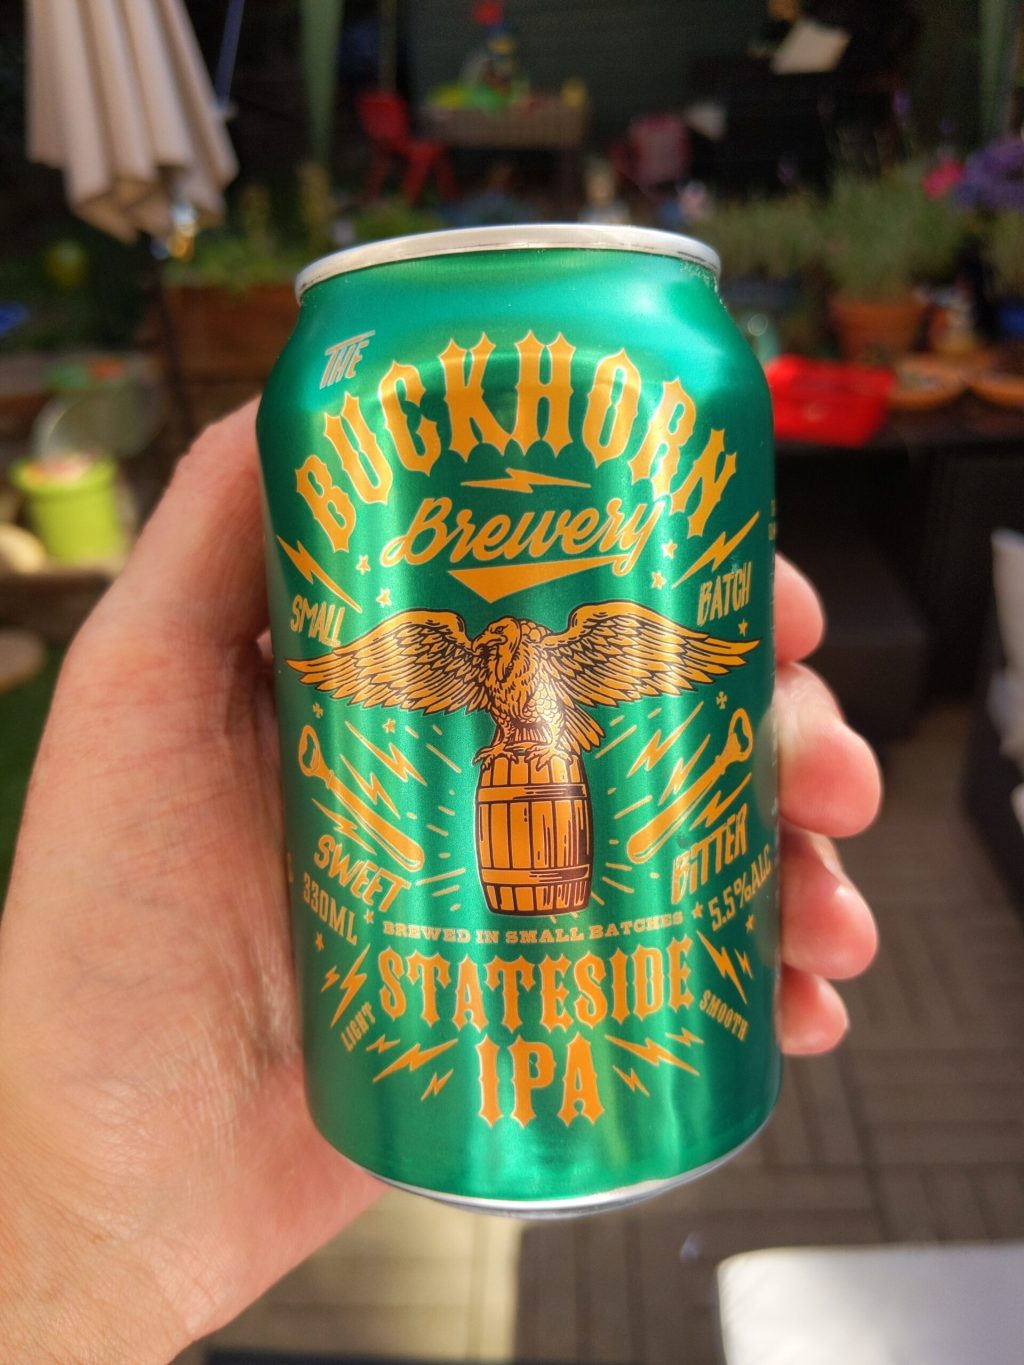 Stateside IPA (The Buckmore Brewery)